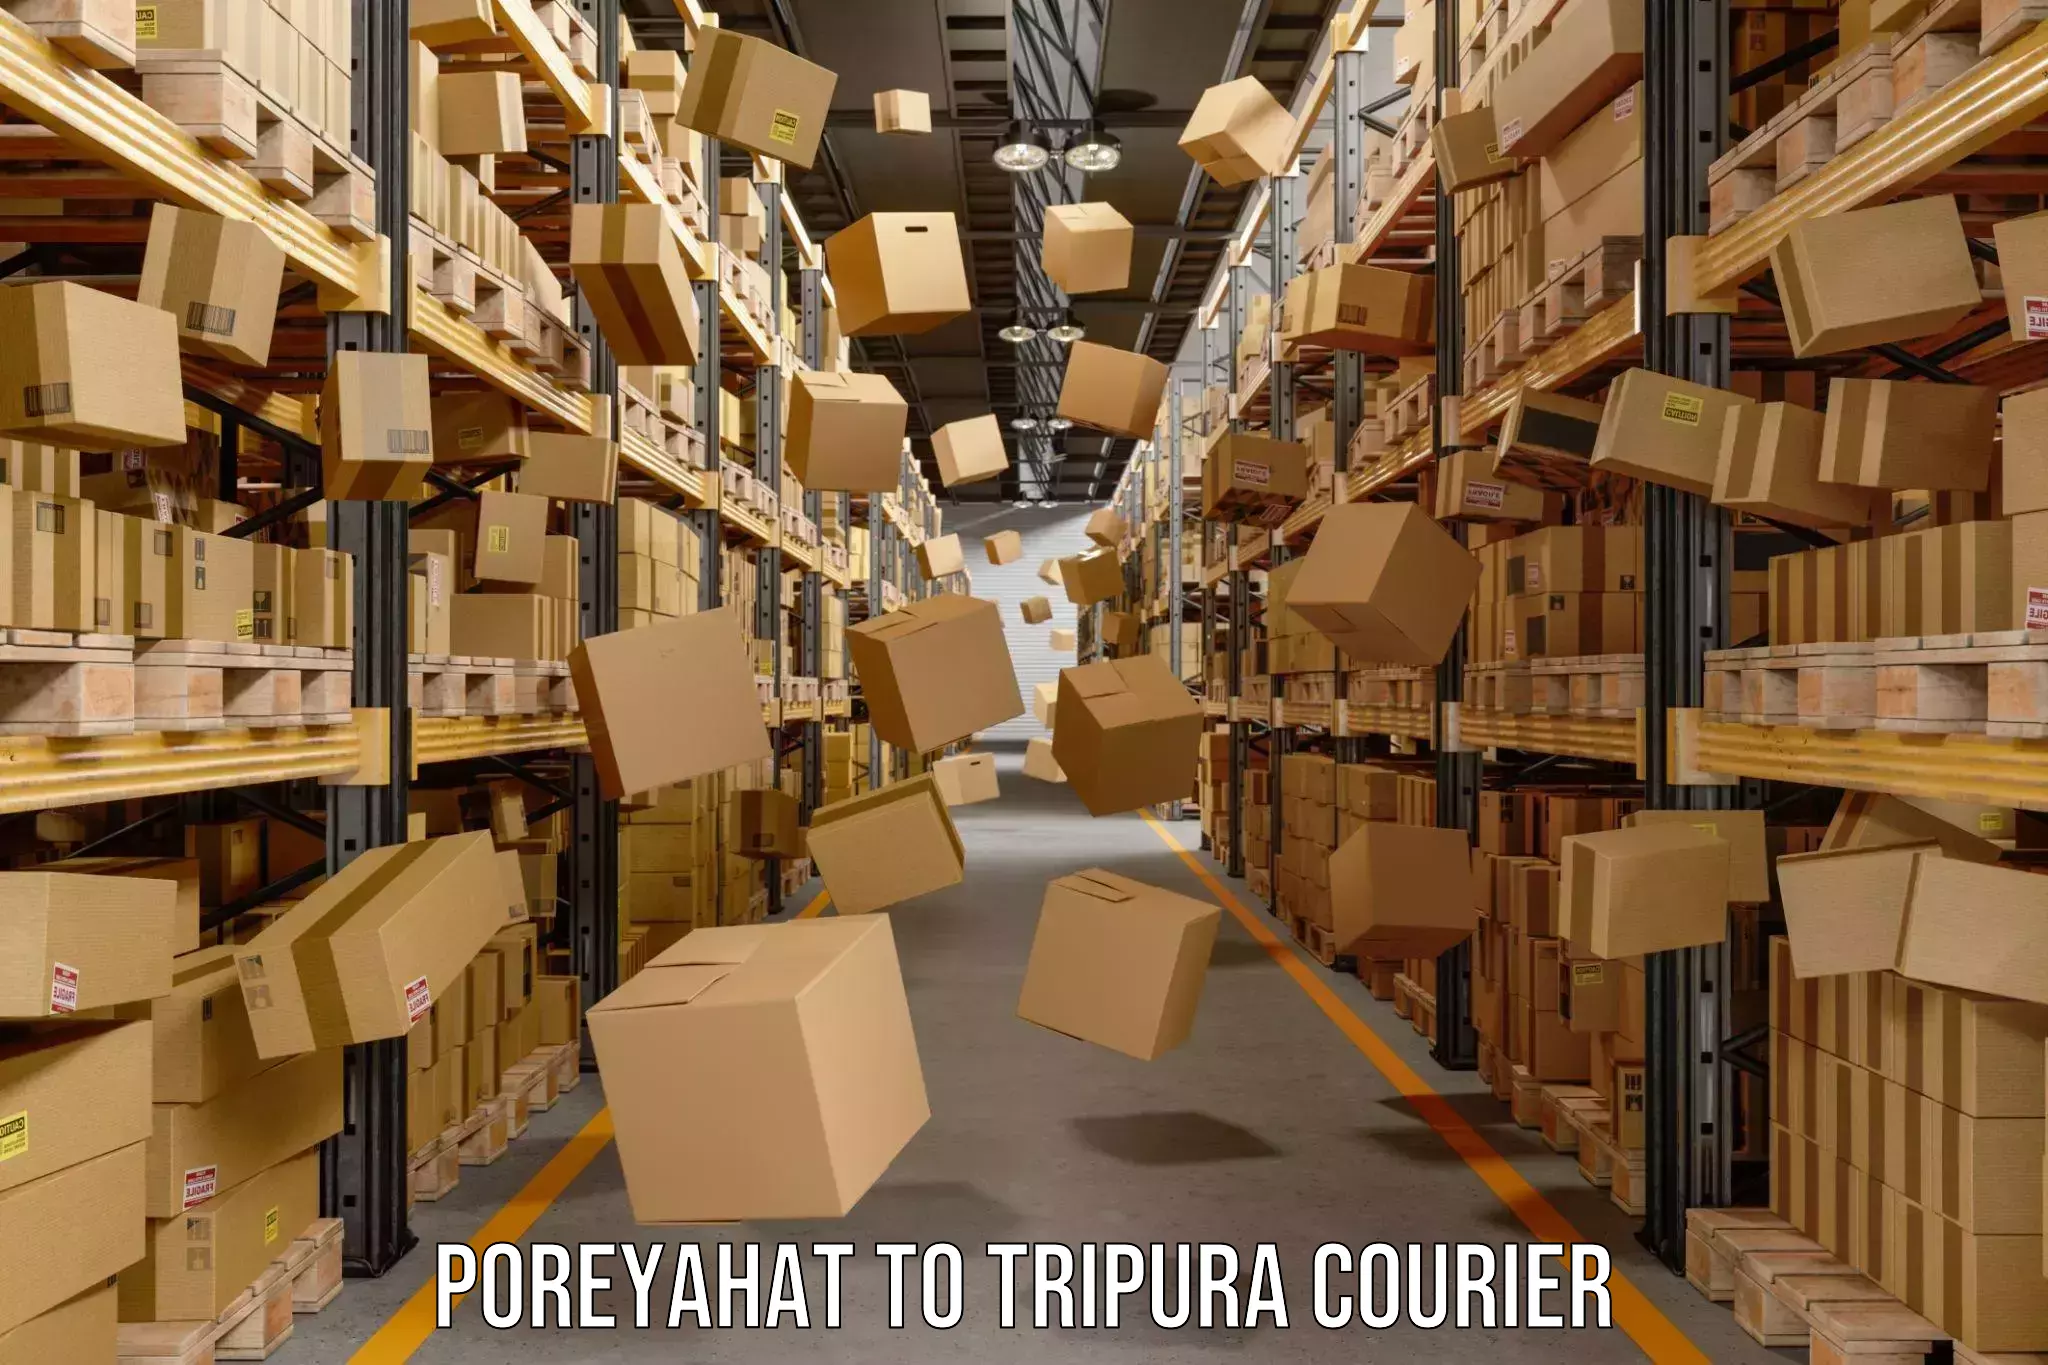 Courier app Poreyahat to Tripura